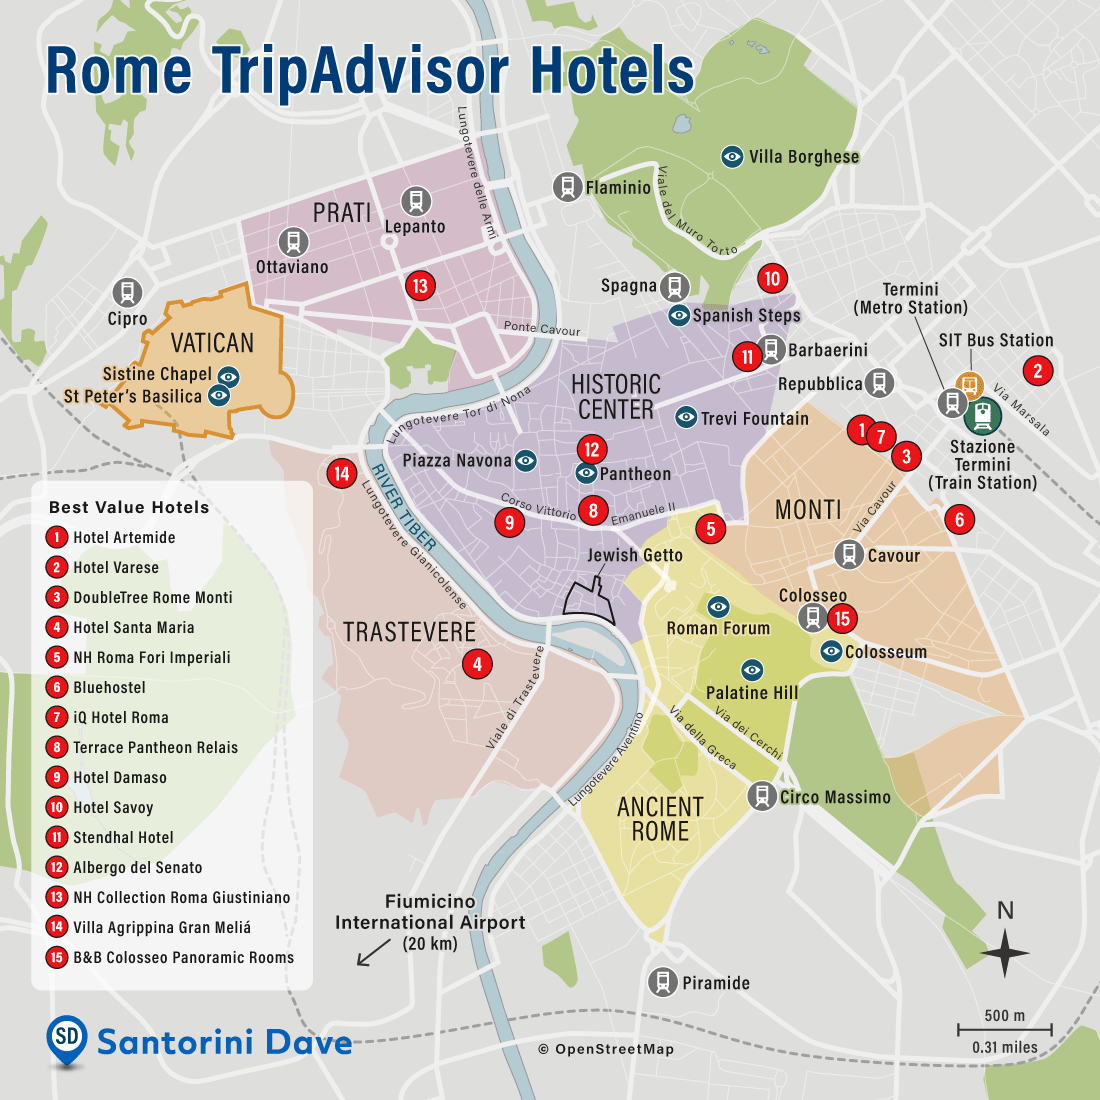 Rome TripAdvisor Hotels